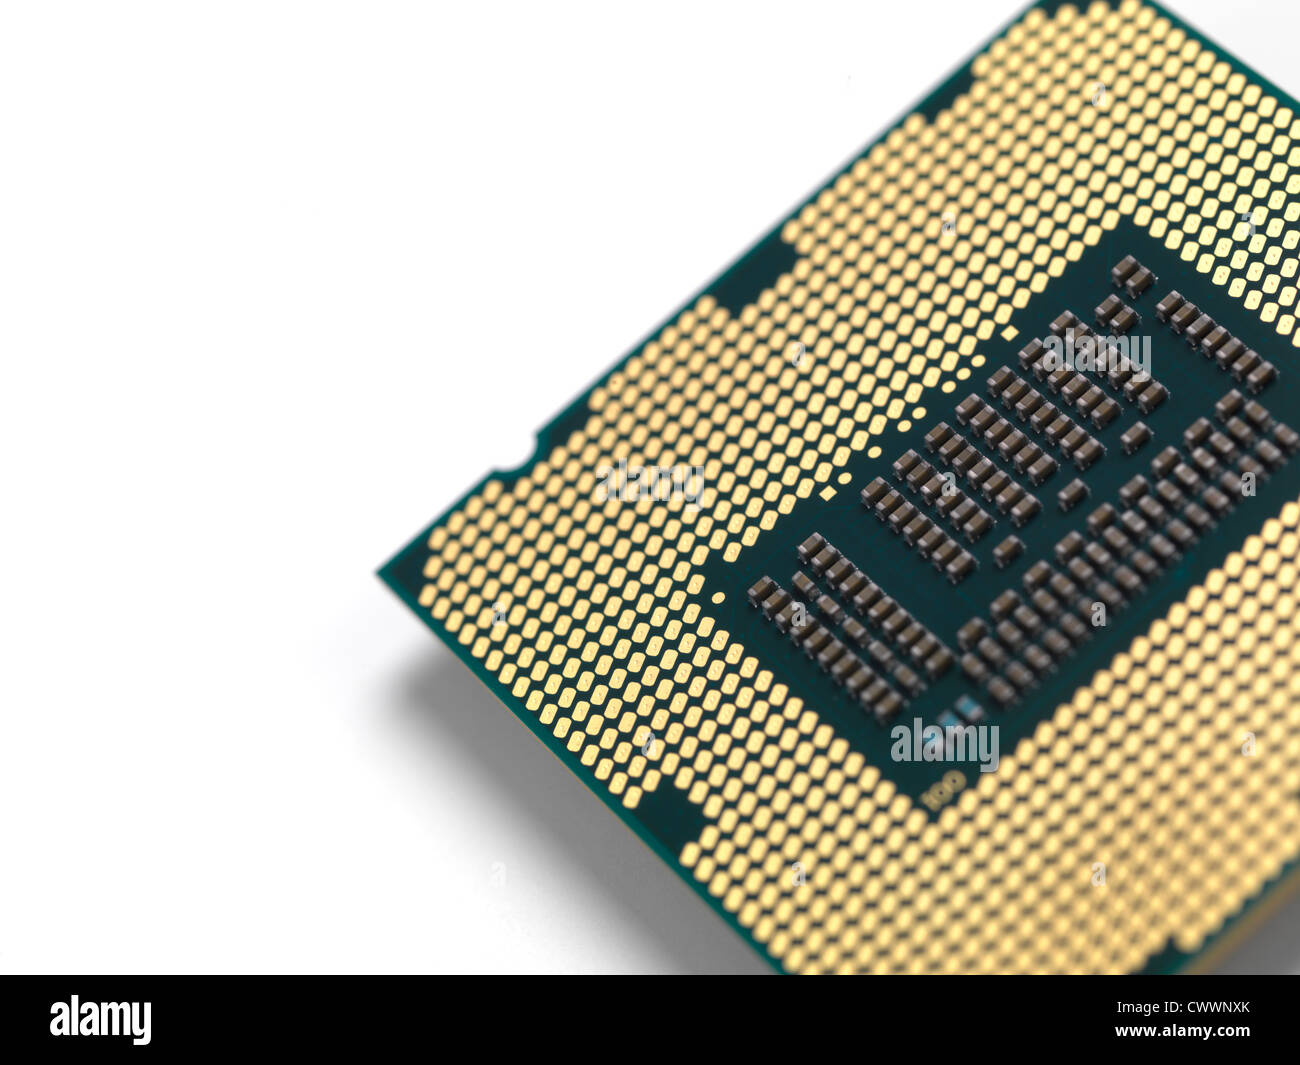 Closeup of Intel i7 3770K processor with LGA 1155 CPU socket isolated on  white background Stock Photo - Alamy